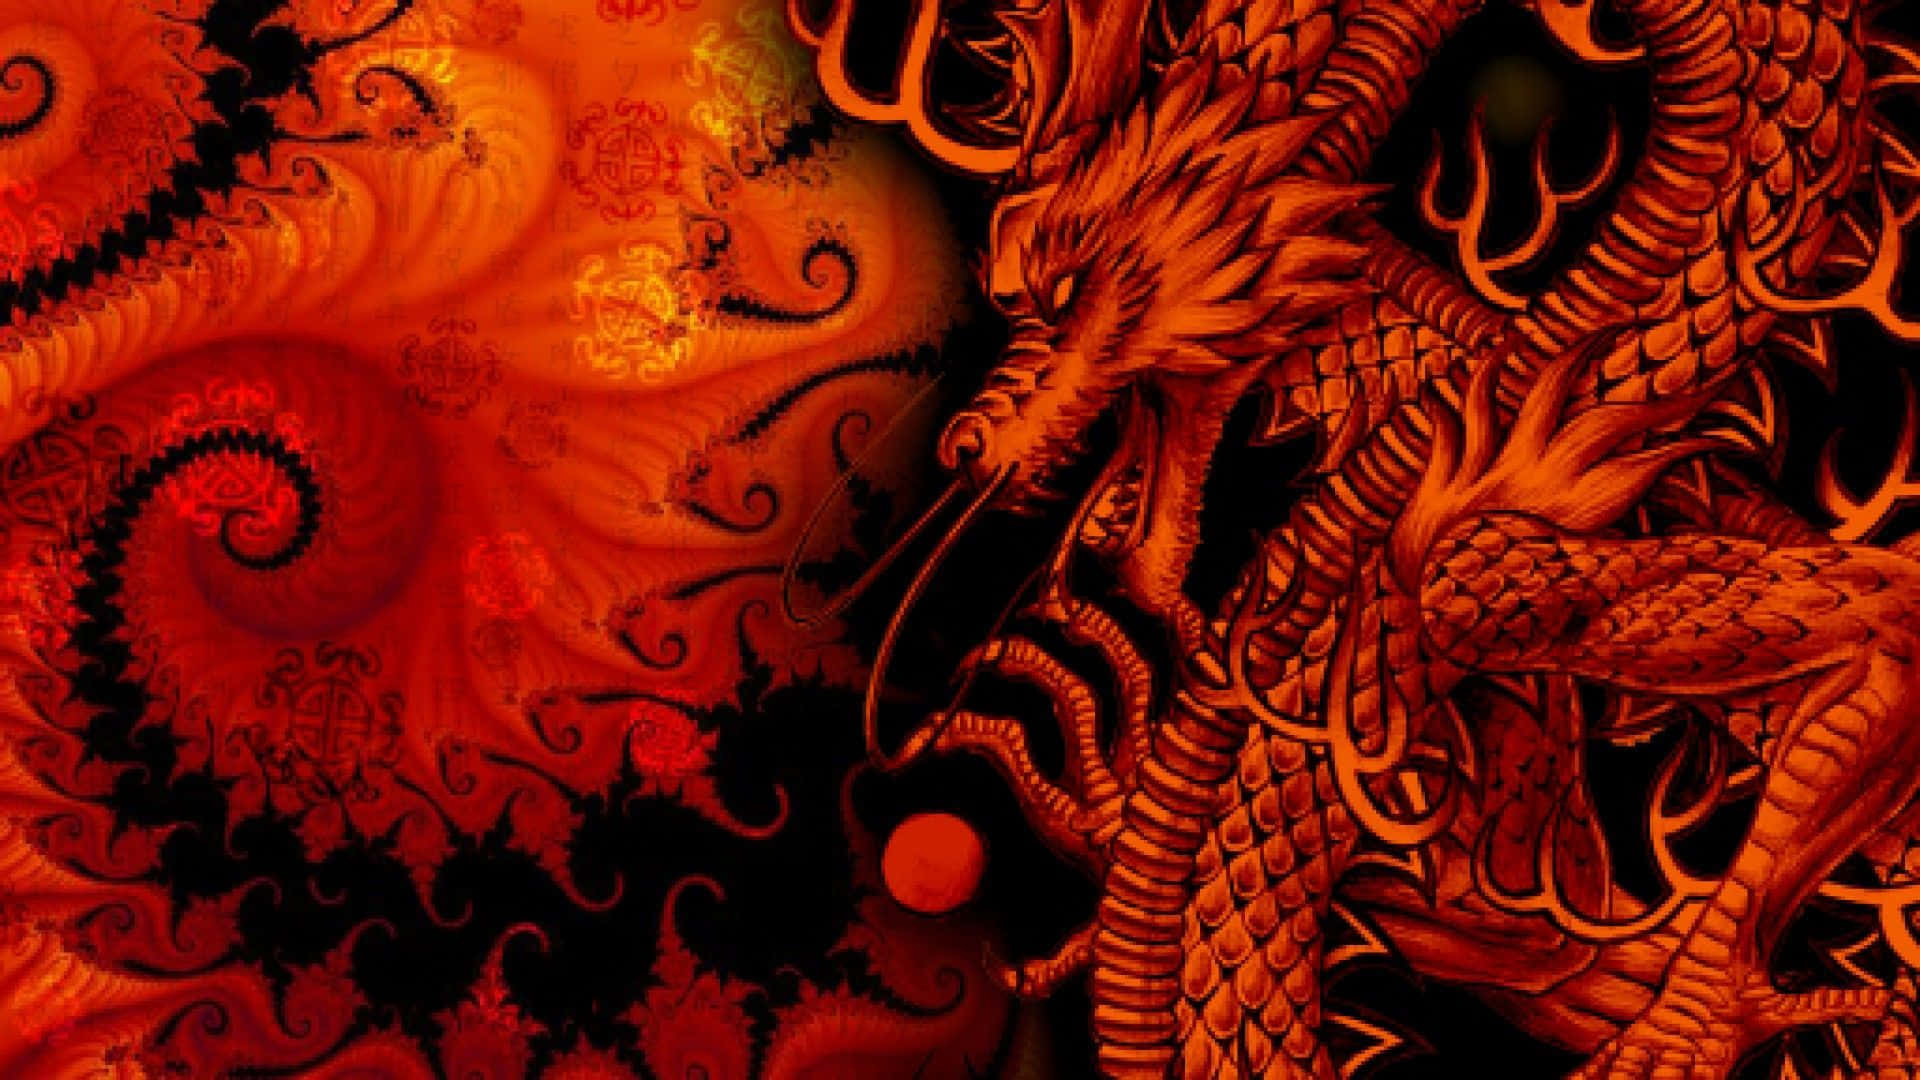 1080p Red Dragon 2002 Film Wallpaper